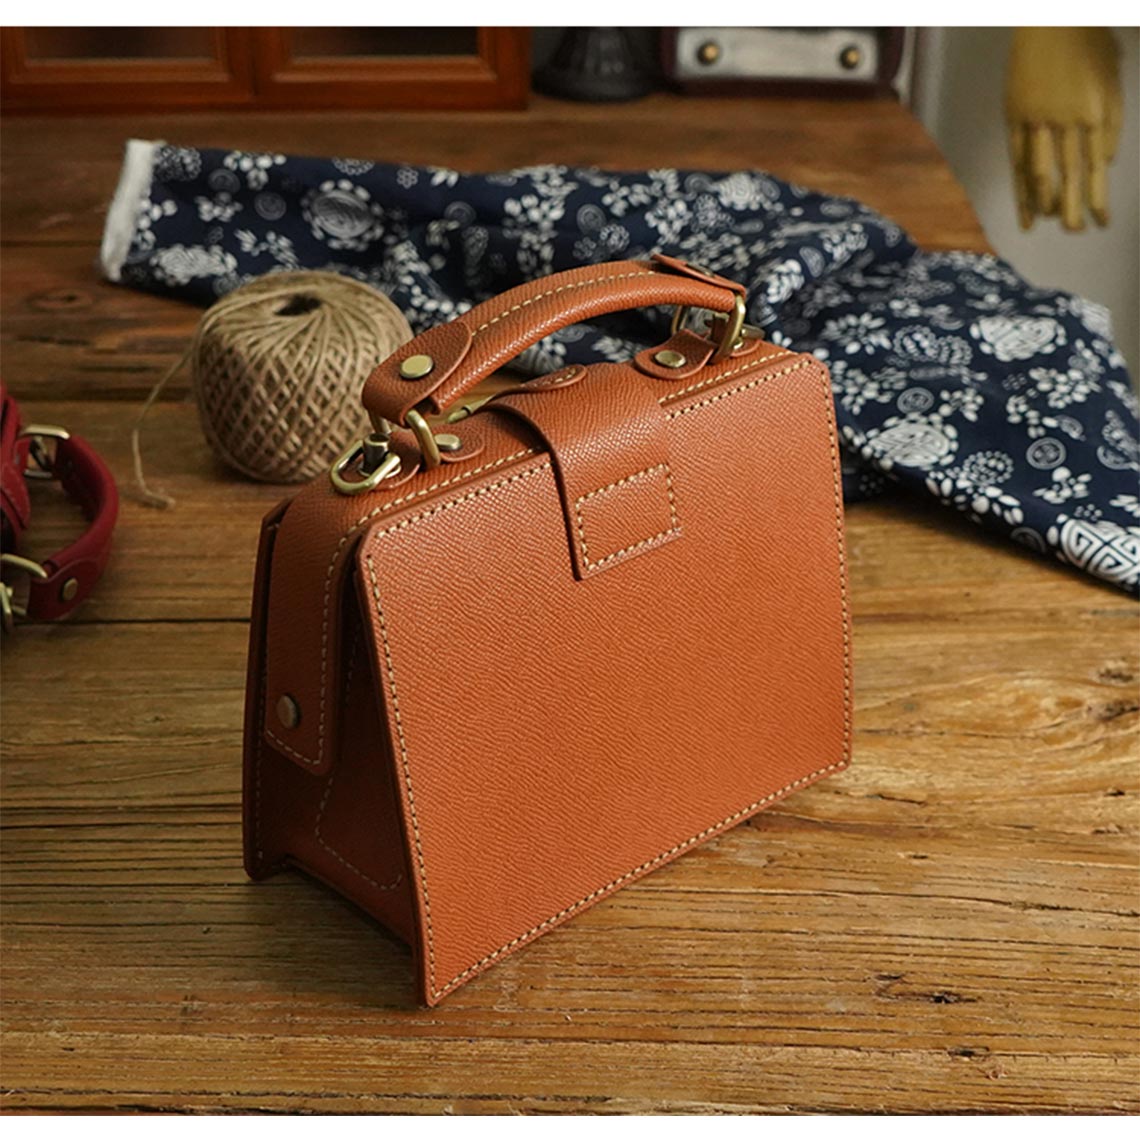 Mini handbags with top handle for women | Clasp closure handbag brown DIY handbag kit - POPSEWING™